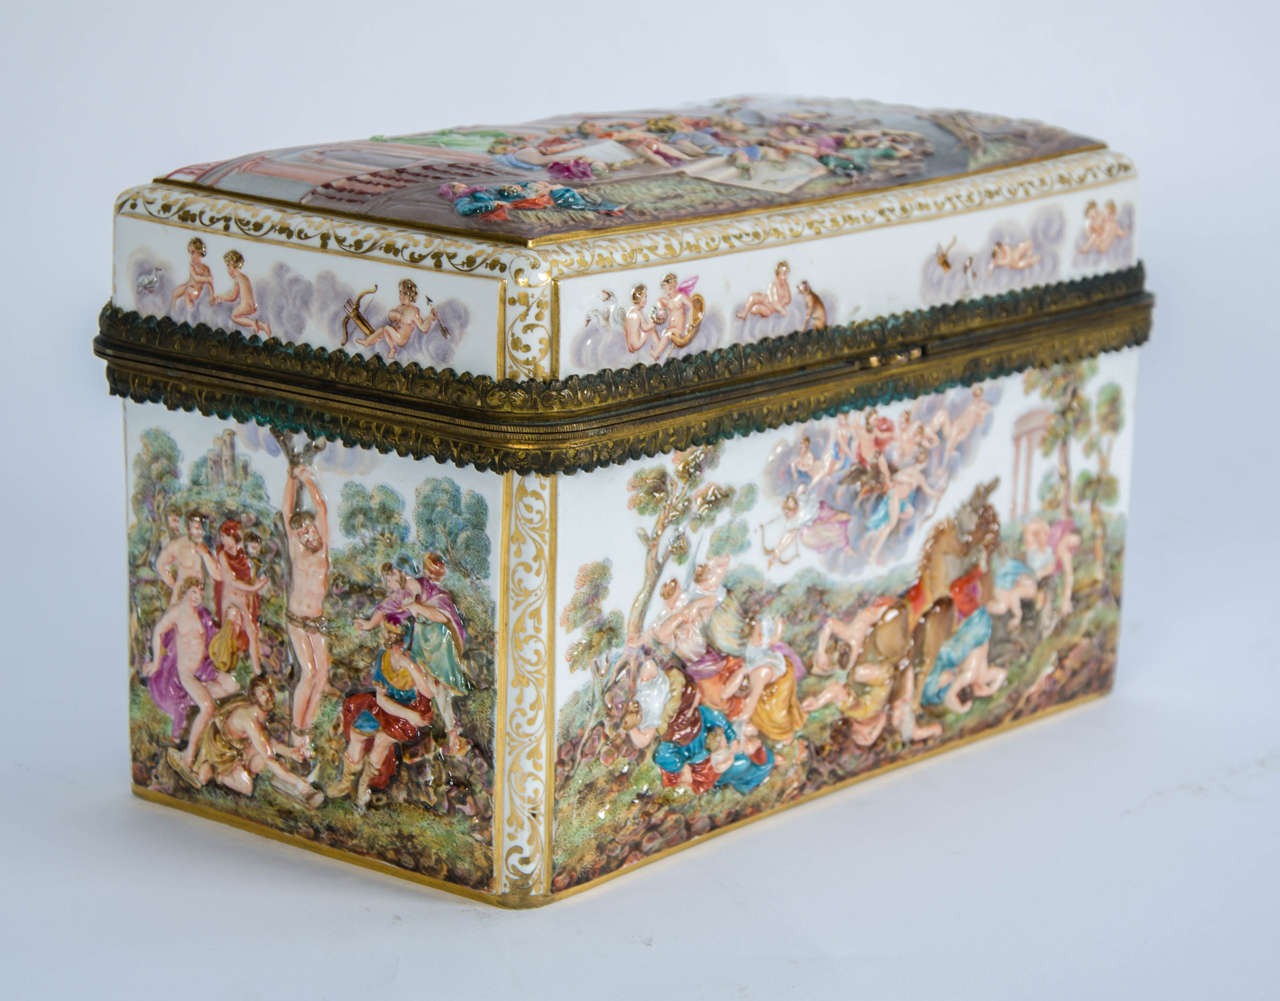 A rare, large and impressive mid-19th century classical Meissen Porcelain casket.